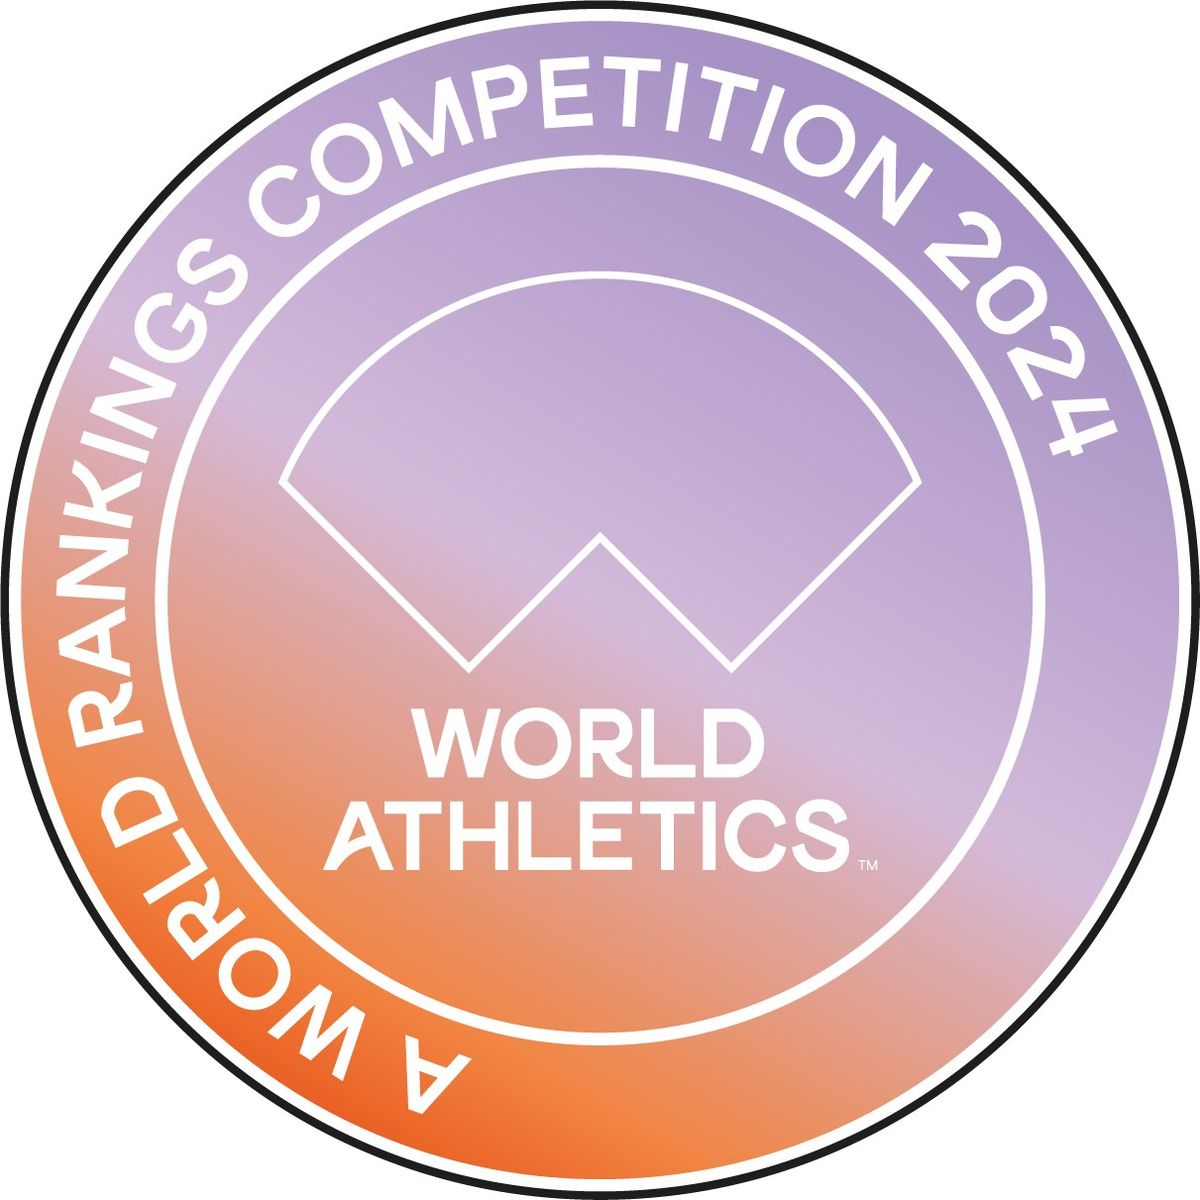 2nd Annual Coach Jason Field Birthday Invitational (World Athletics Certified\/Olympic Standard Meet)